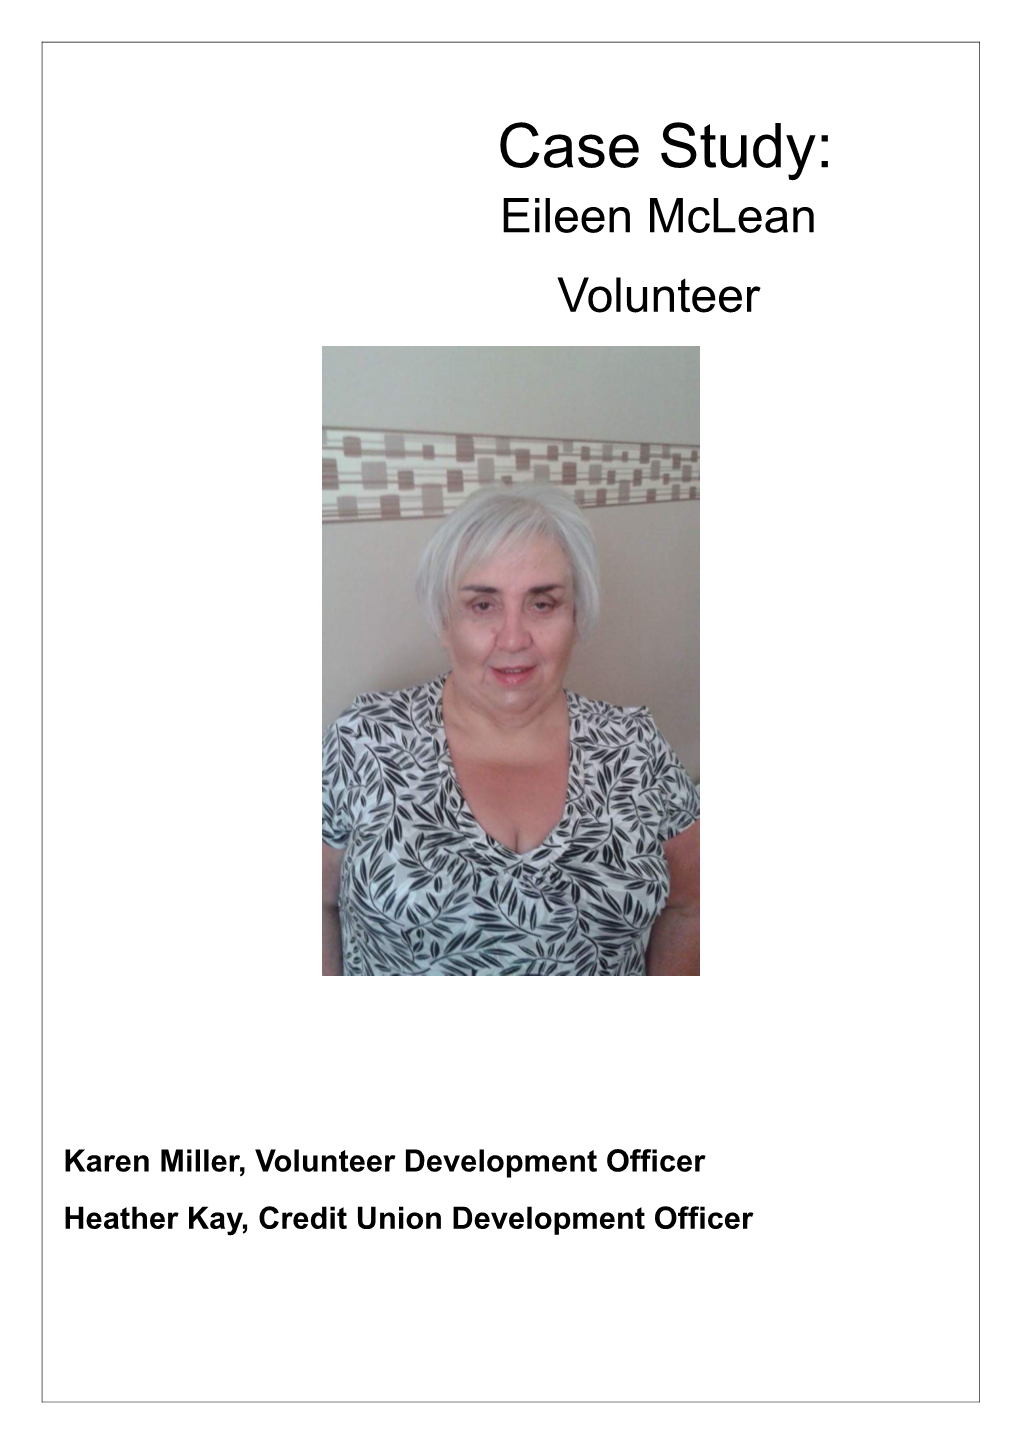 Karen Miller, Volunteer Development Officer